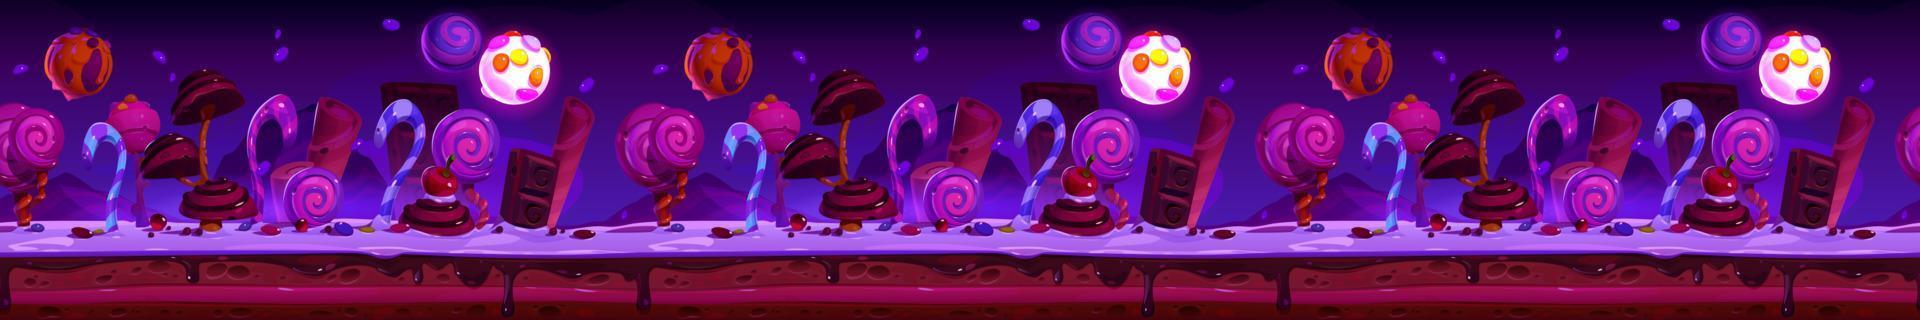 dulce planeta noche paisaje dibujos animados juego plataforma vector